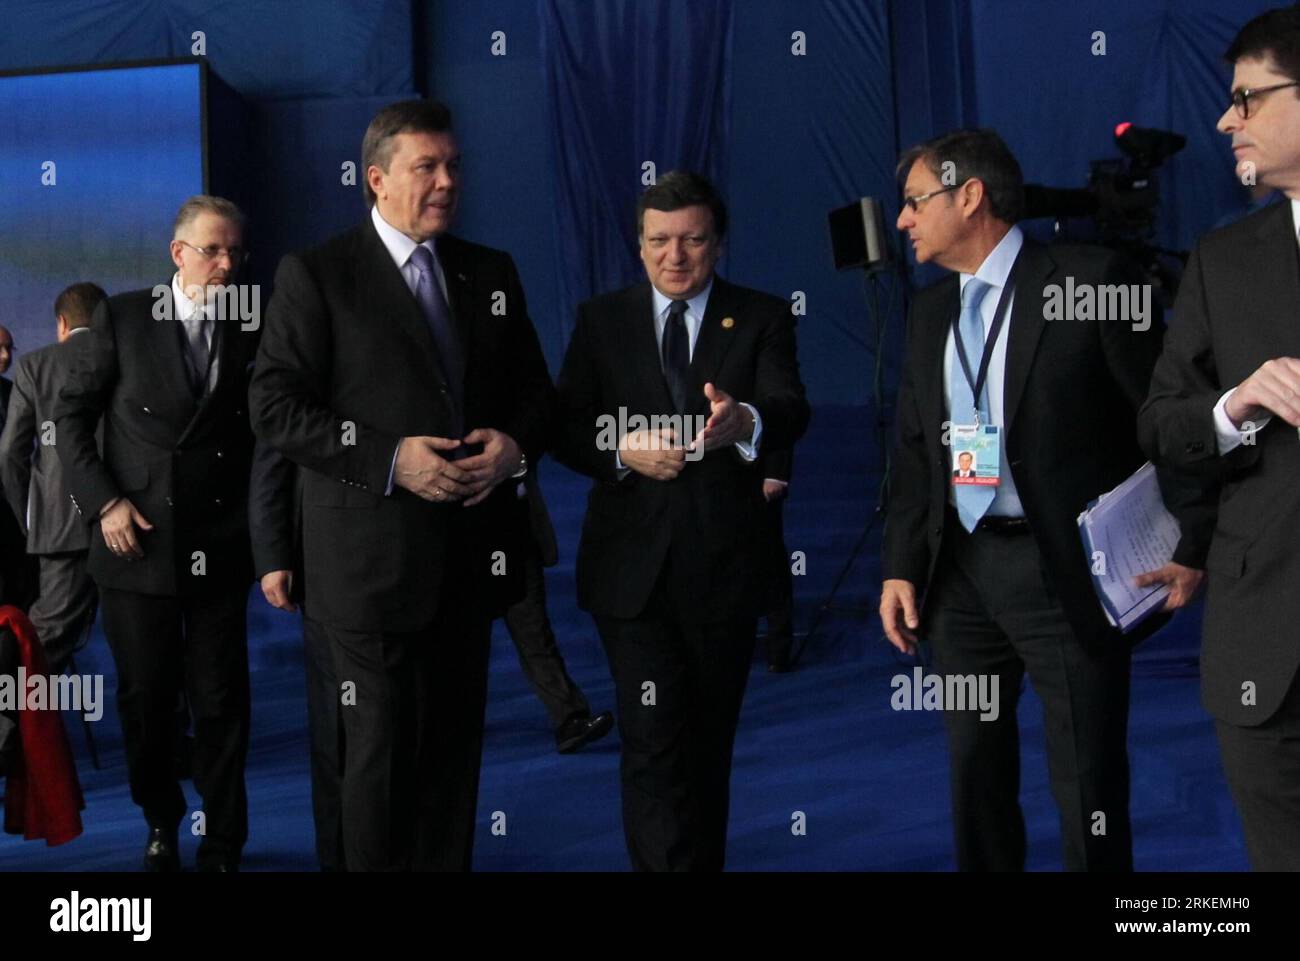 Bildnummer: 55274530  Datum: 19.04.2011  Copyright: imago/Xinhua (110419) -- KIEV, April 19, 2011 (Xinhua) -- European Commission President Jose Manuel Barroso (3rd R) and Ukrainian President Viktor Yanukovich (4th R) arrive at the venue of the Kiev Summit on safe and innovative use of nuclear energy in Kiev, capital of Ukraine, April 19, 2011. (Xinhua/Lu Jinbo) (lyi) UKRAINE-KIEV-NUCLEAR-SUMIT PUBLICATIONxNOTxINxCHN Politik People Atomenergie Tschernobylkonferenz Konferenz atomare Sicherheit kbdig xub 2011 quer premiumd     Bildnummer 55274530 Date 19 04 2011 Copyright Imago XINHUA  Kiev Apri Stock Photo